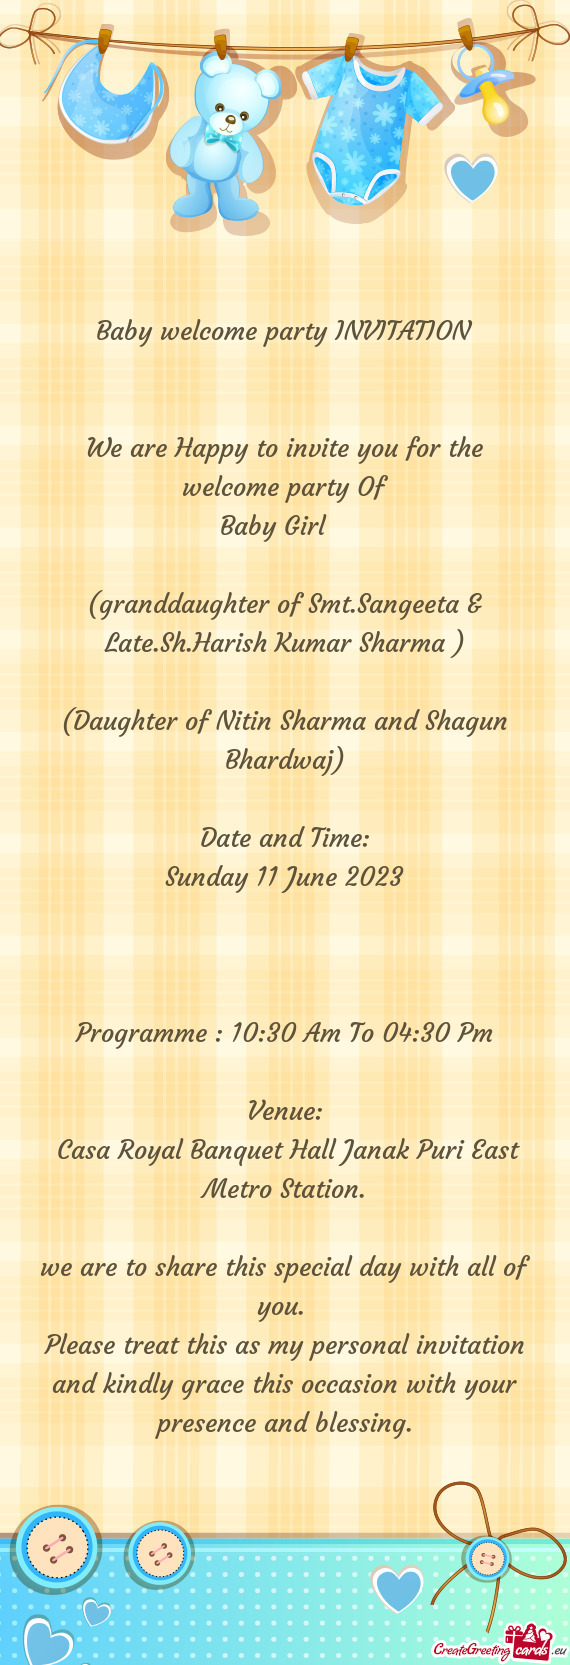 (granddaughter of Smt.Sangeeta & Late.Sh.Harish Kumar Sharma )